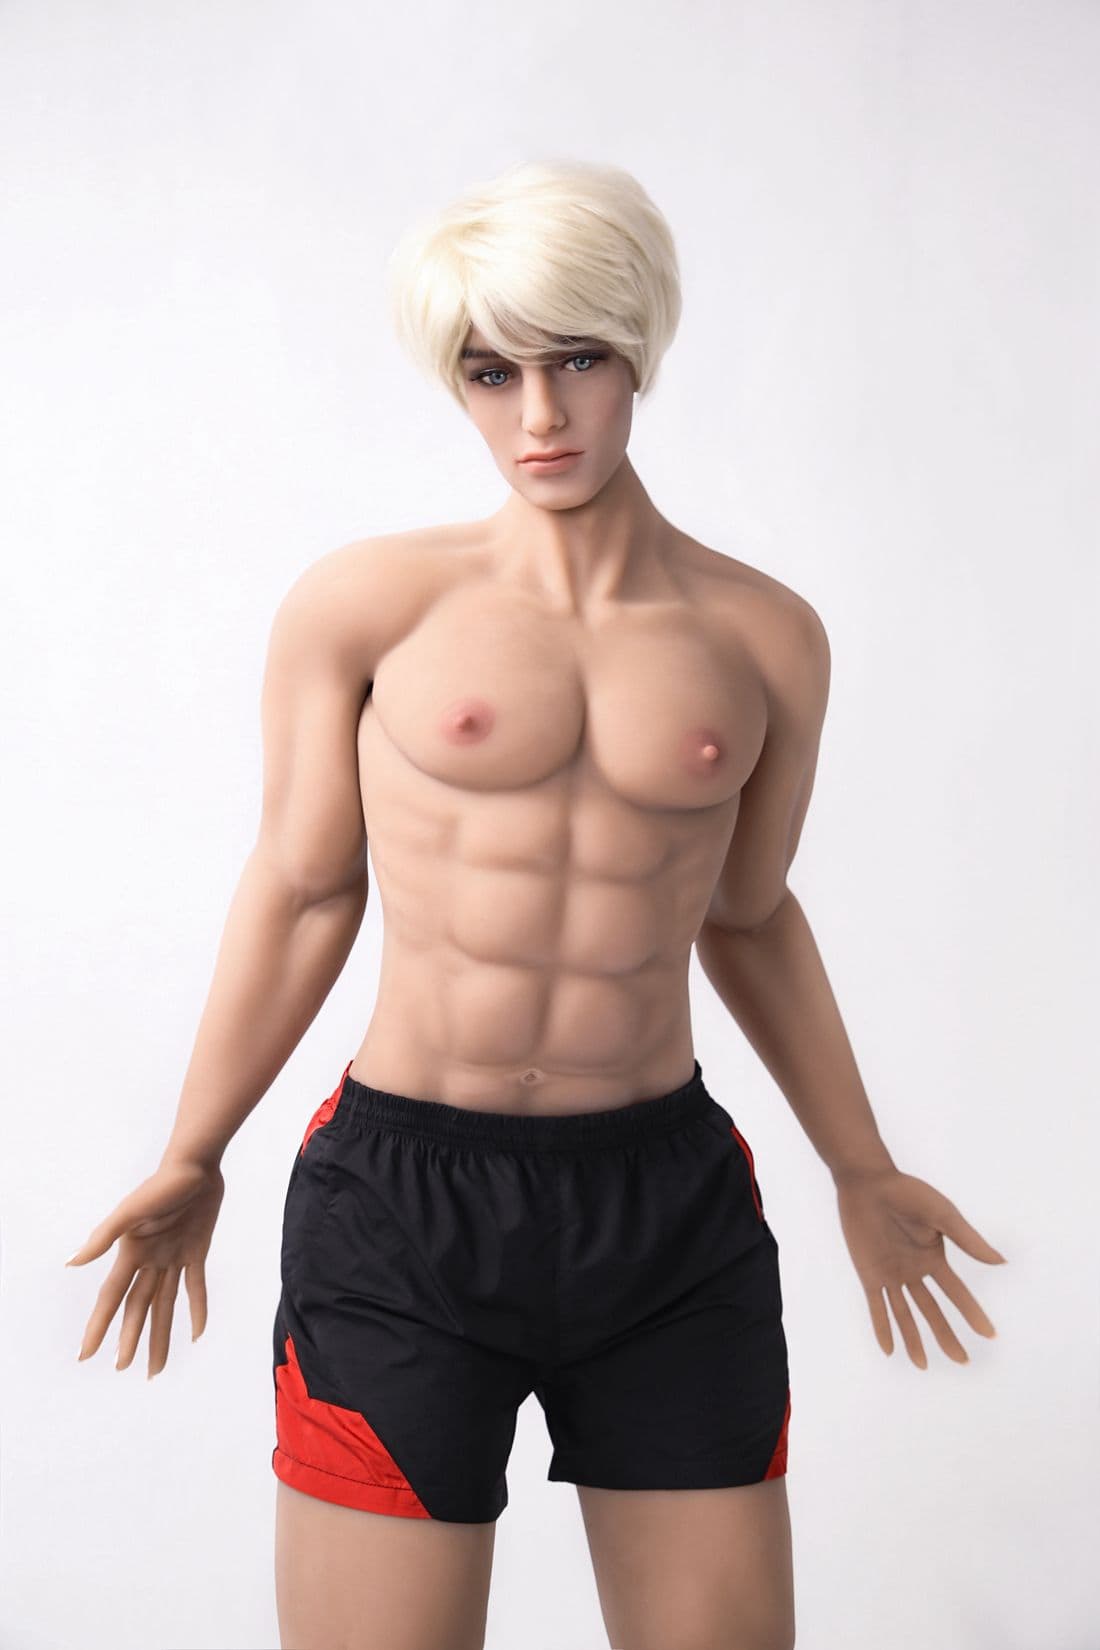 terry 180cm 5ft9 af blonde male athletic tpe gay boy sex doll(4)